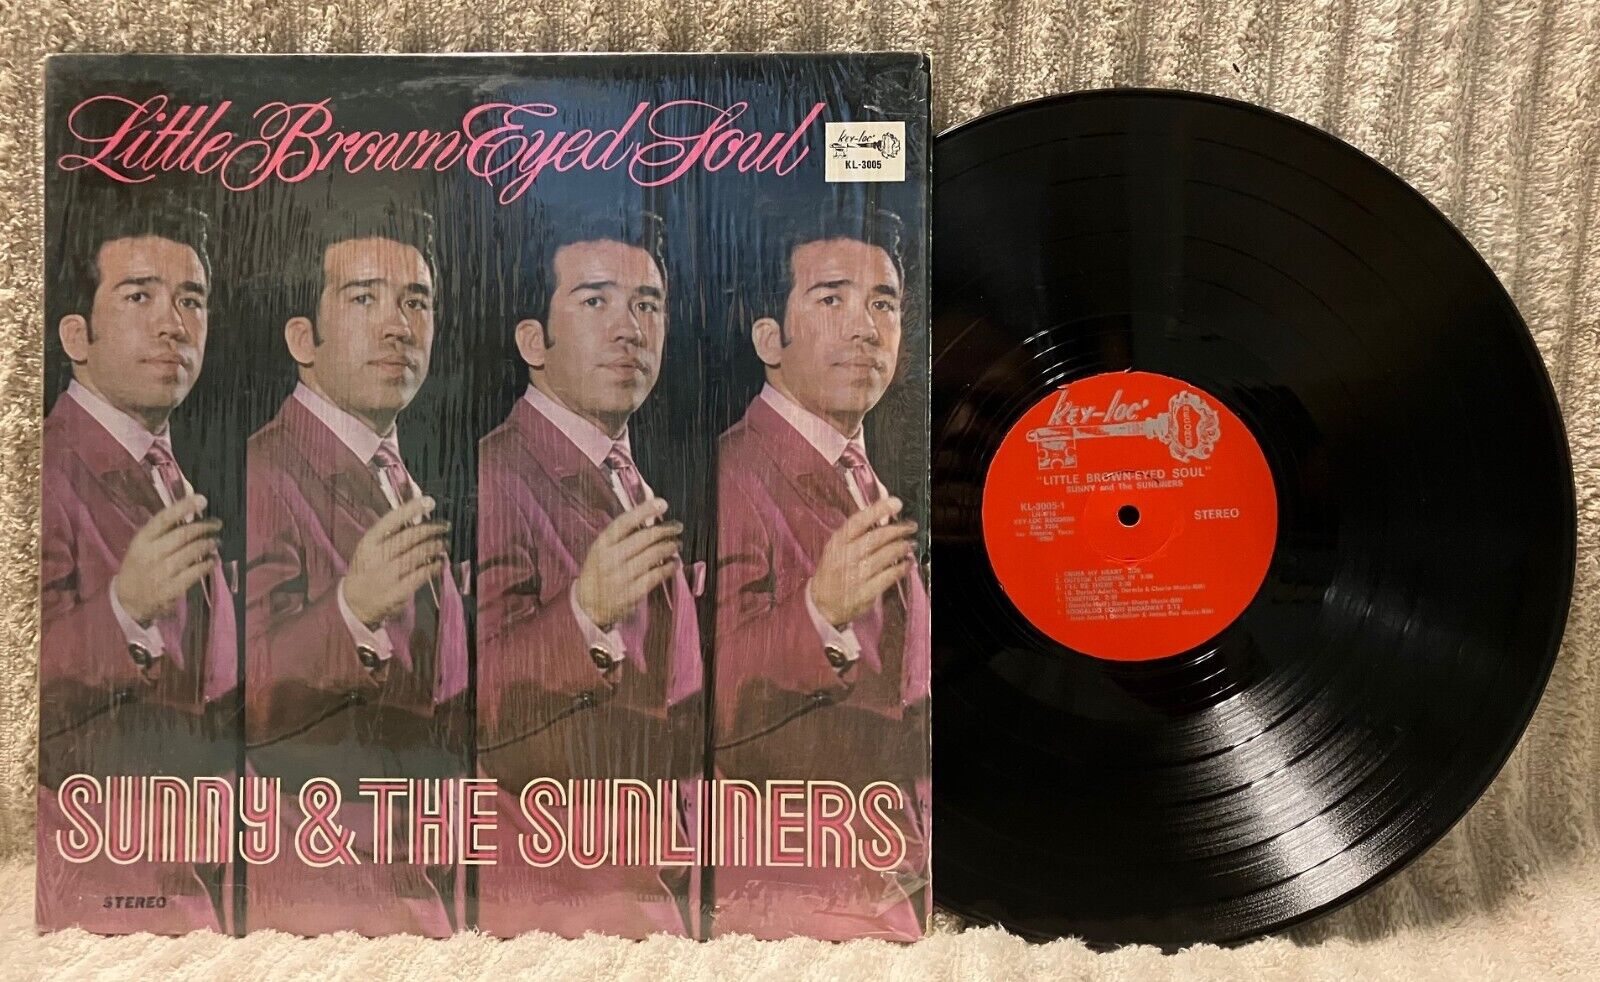 SWEET SOUL LATIN FUNK LP -SUNNY & the SUNLINERS - IN SHRINK--1968  KEY-LOC 3005